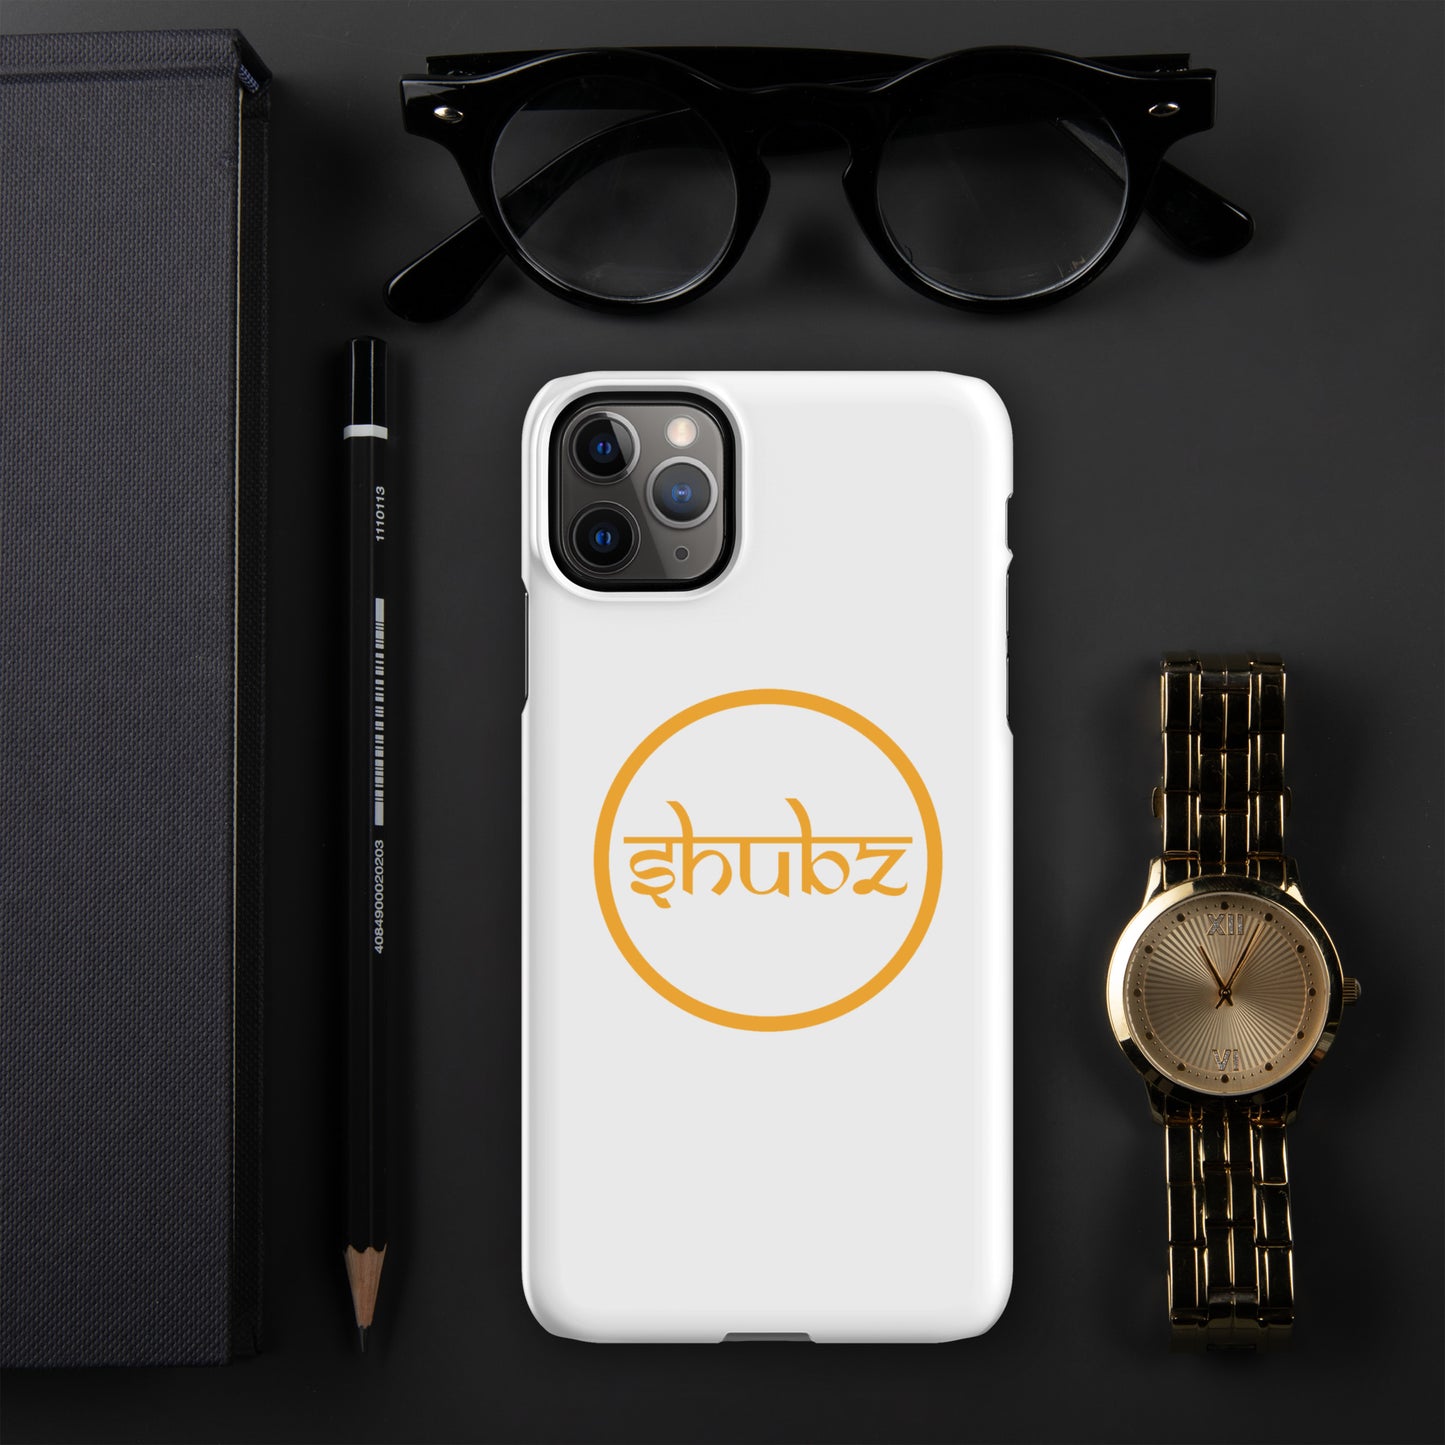 Shubz Logo Iphone Phone Case